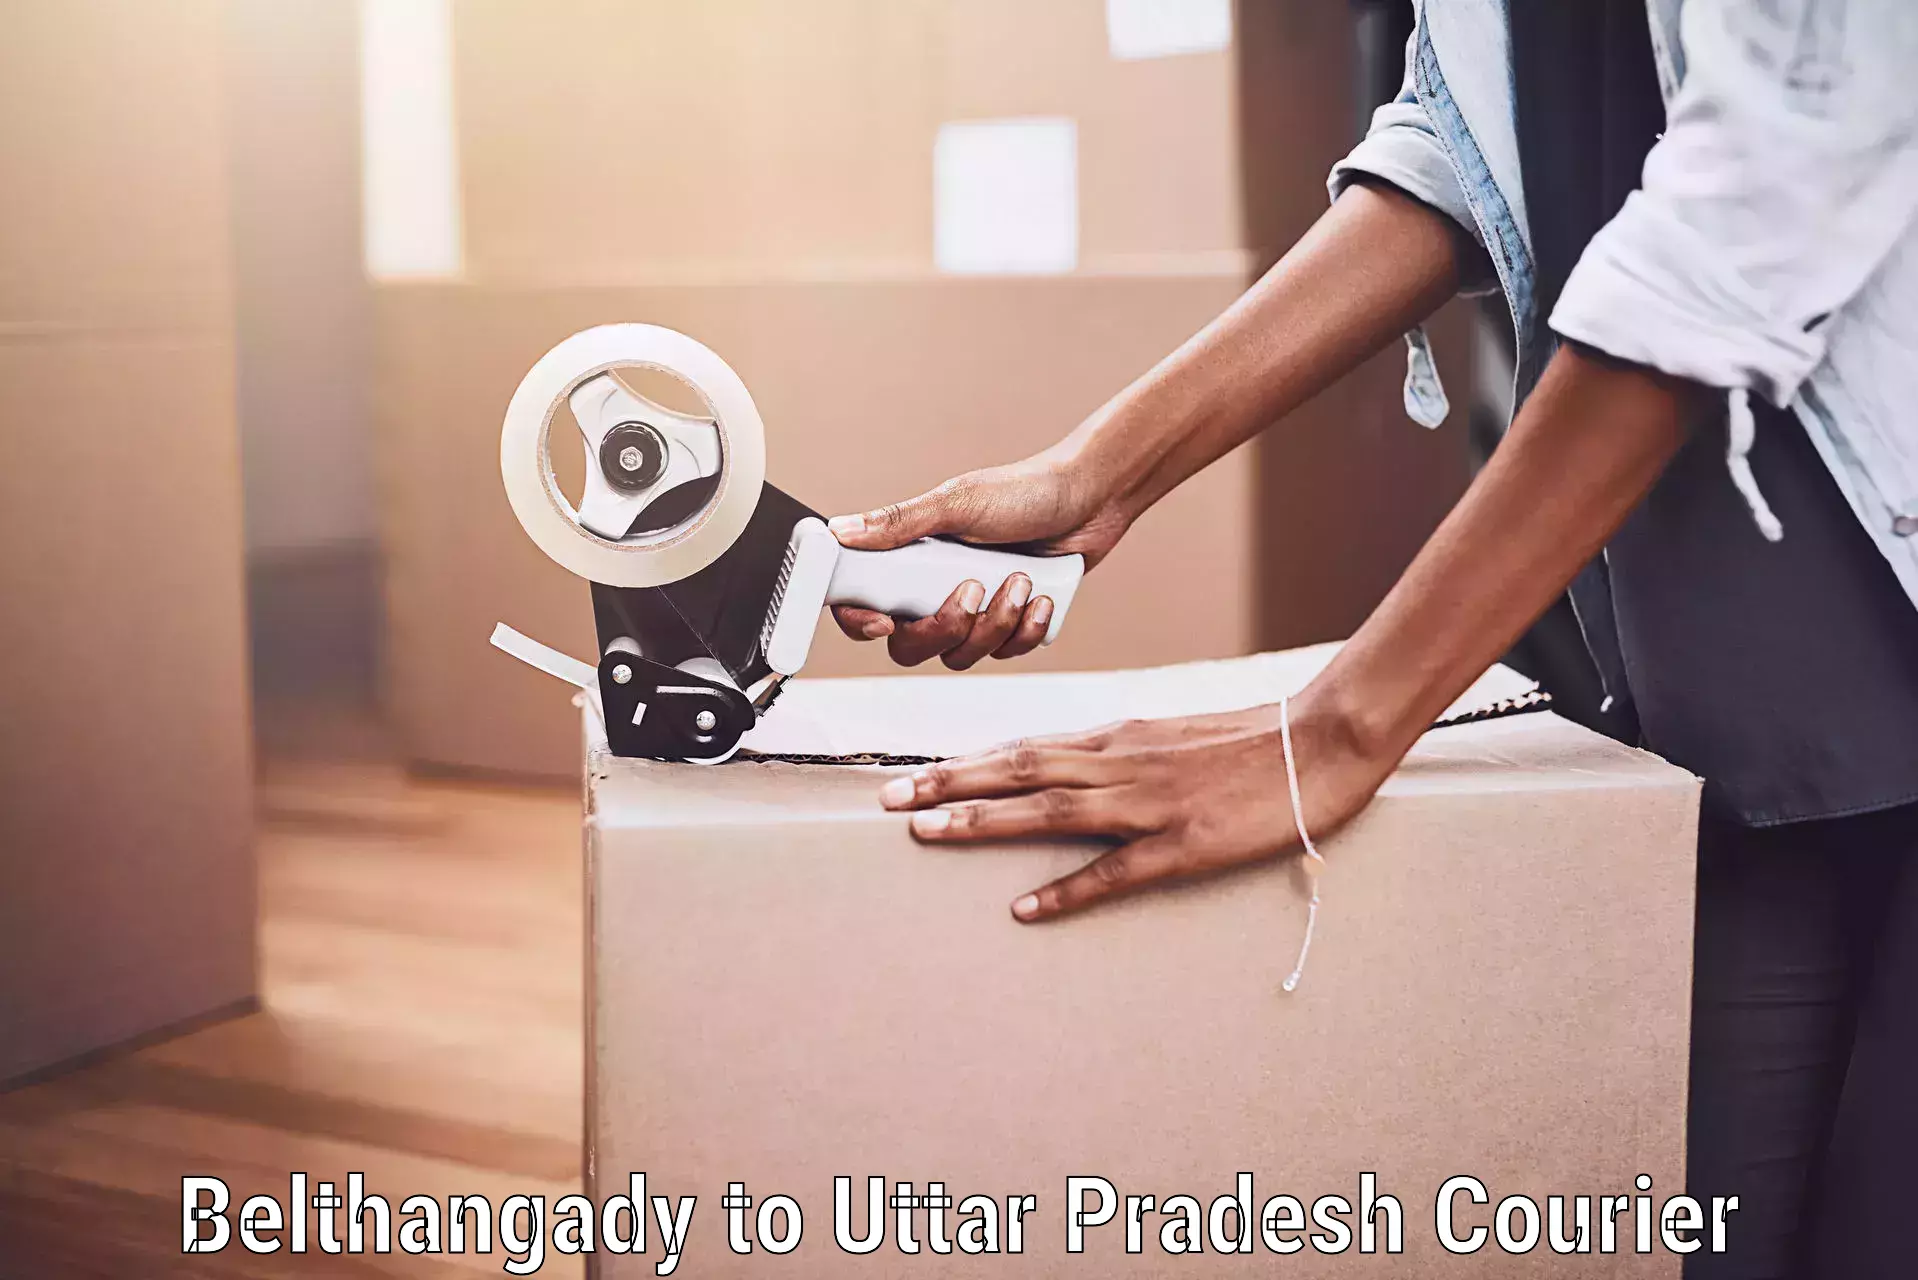 Luggage shipment specialists Belthangady to Uttar Pradesh